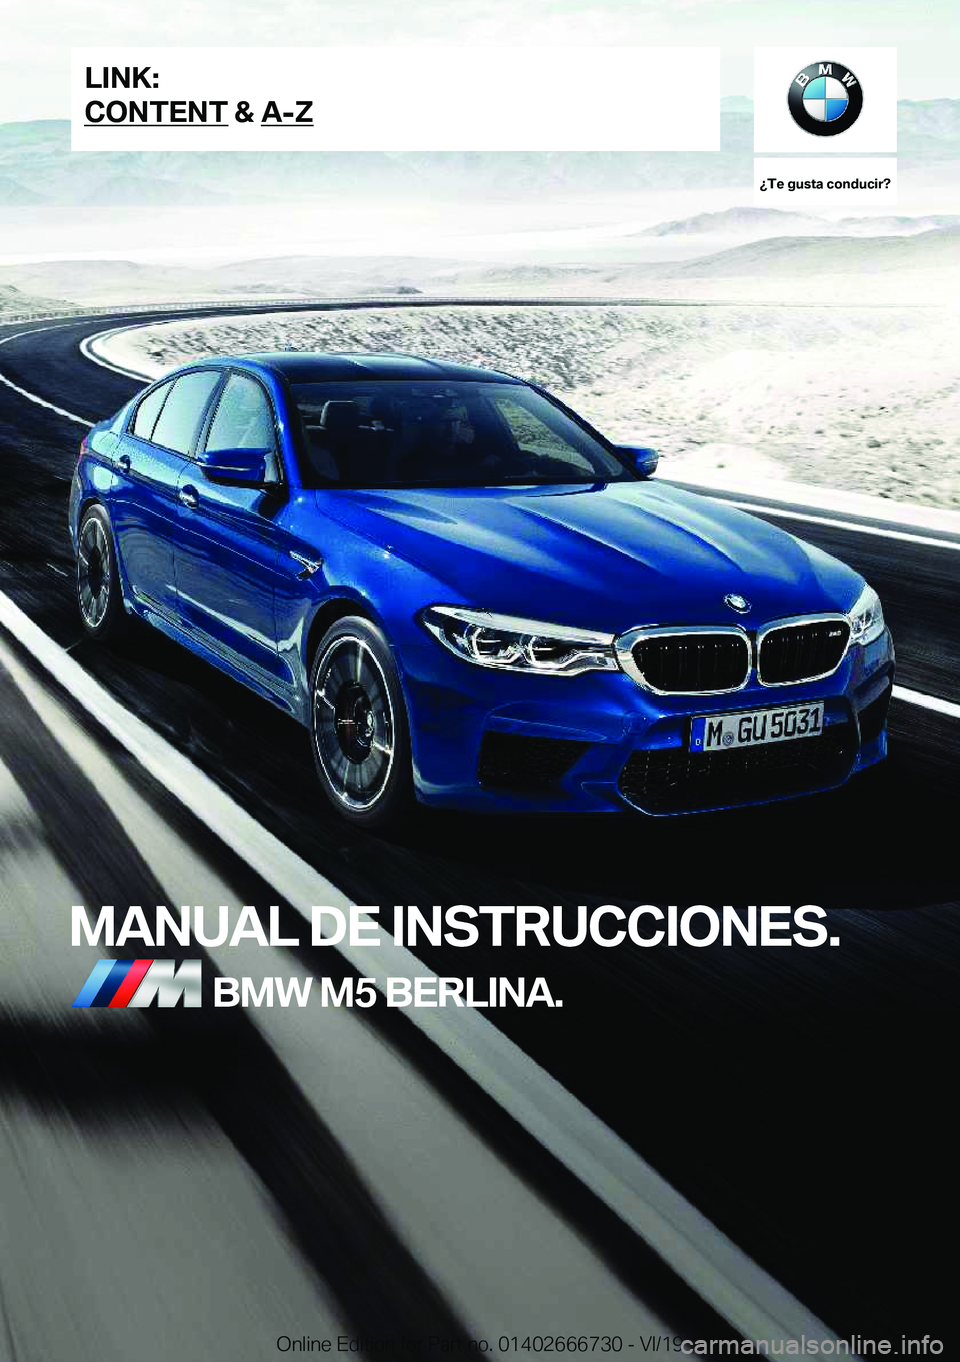 BMW M5 2020  Manuales de Empleo (in Spanish) ��T�e��g�u�s�t�a��c�o�n�d�u�c�i�r� 
�M�A�N�U�A�L��D�E��I�N�S�T�R�U�C�C�I�O�N�E�S�.�B�M�W��M�5��B�E�R�L�I�N�A�.�L�I�N�K�:
�C�O�N�T�E�N�T��&��A�-�Z�O�n�l�i�n�e��E�d�i�t�i�o�n��f�o�r��P�a�r�t